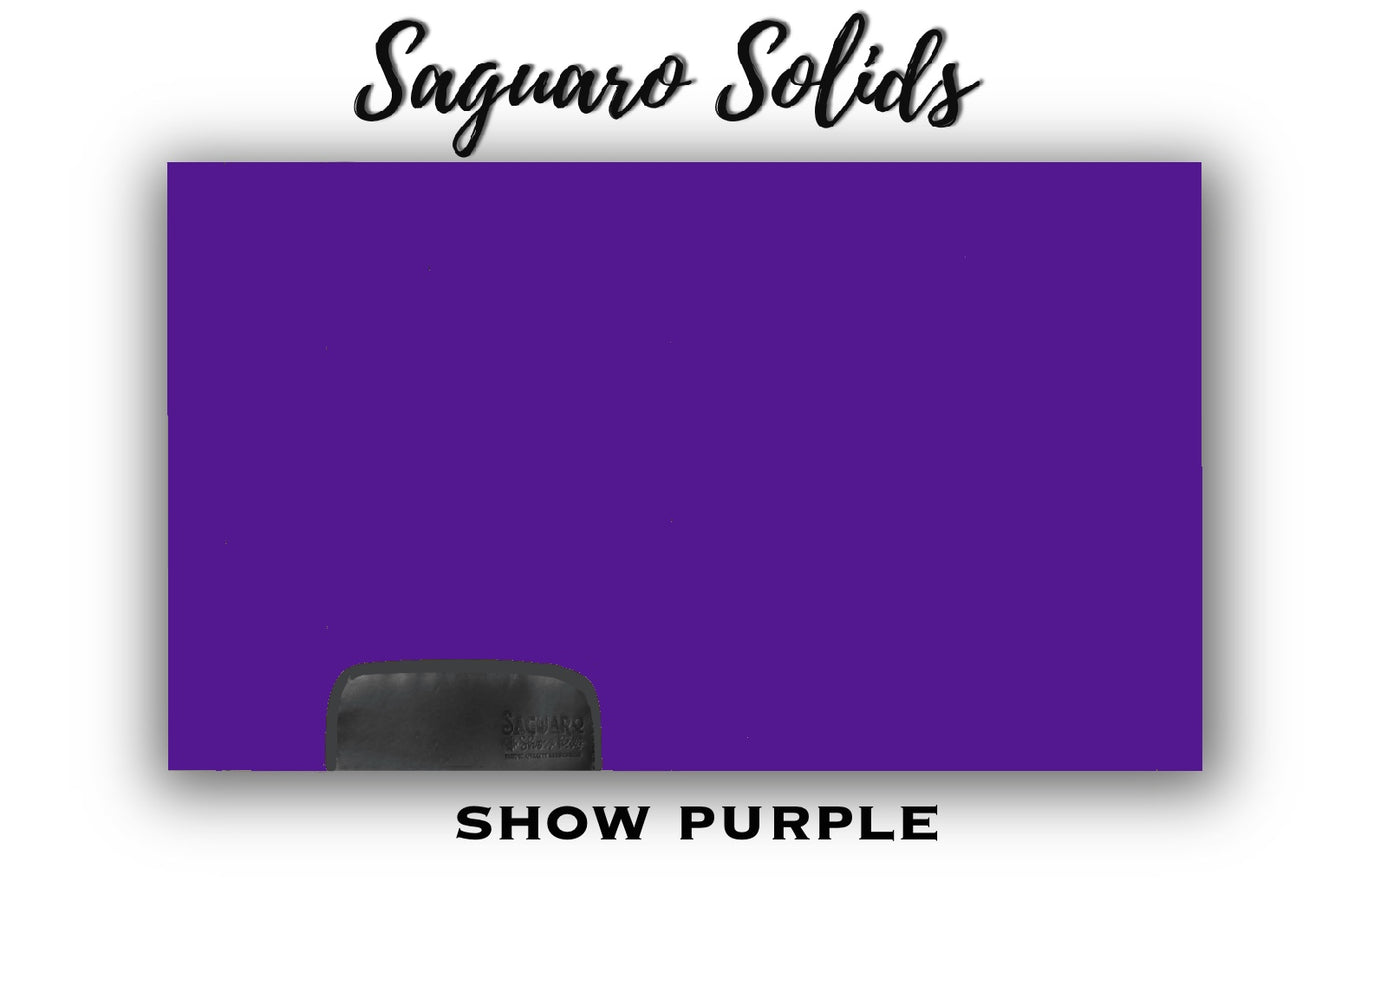 Saguaro Solid "Show Purple" Show Pad (SEMI-CUSTOM)